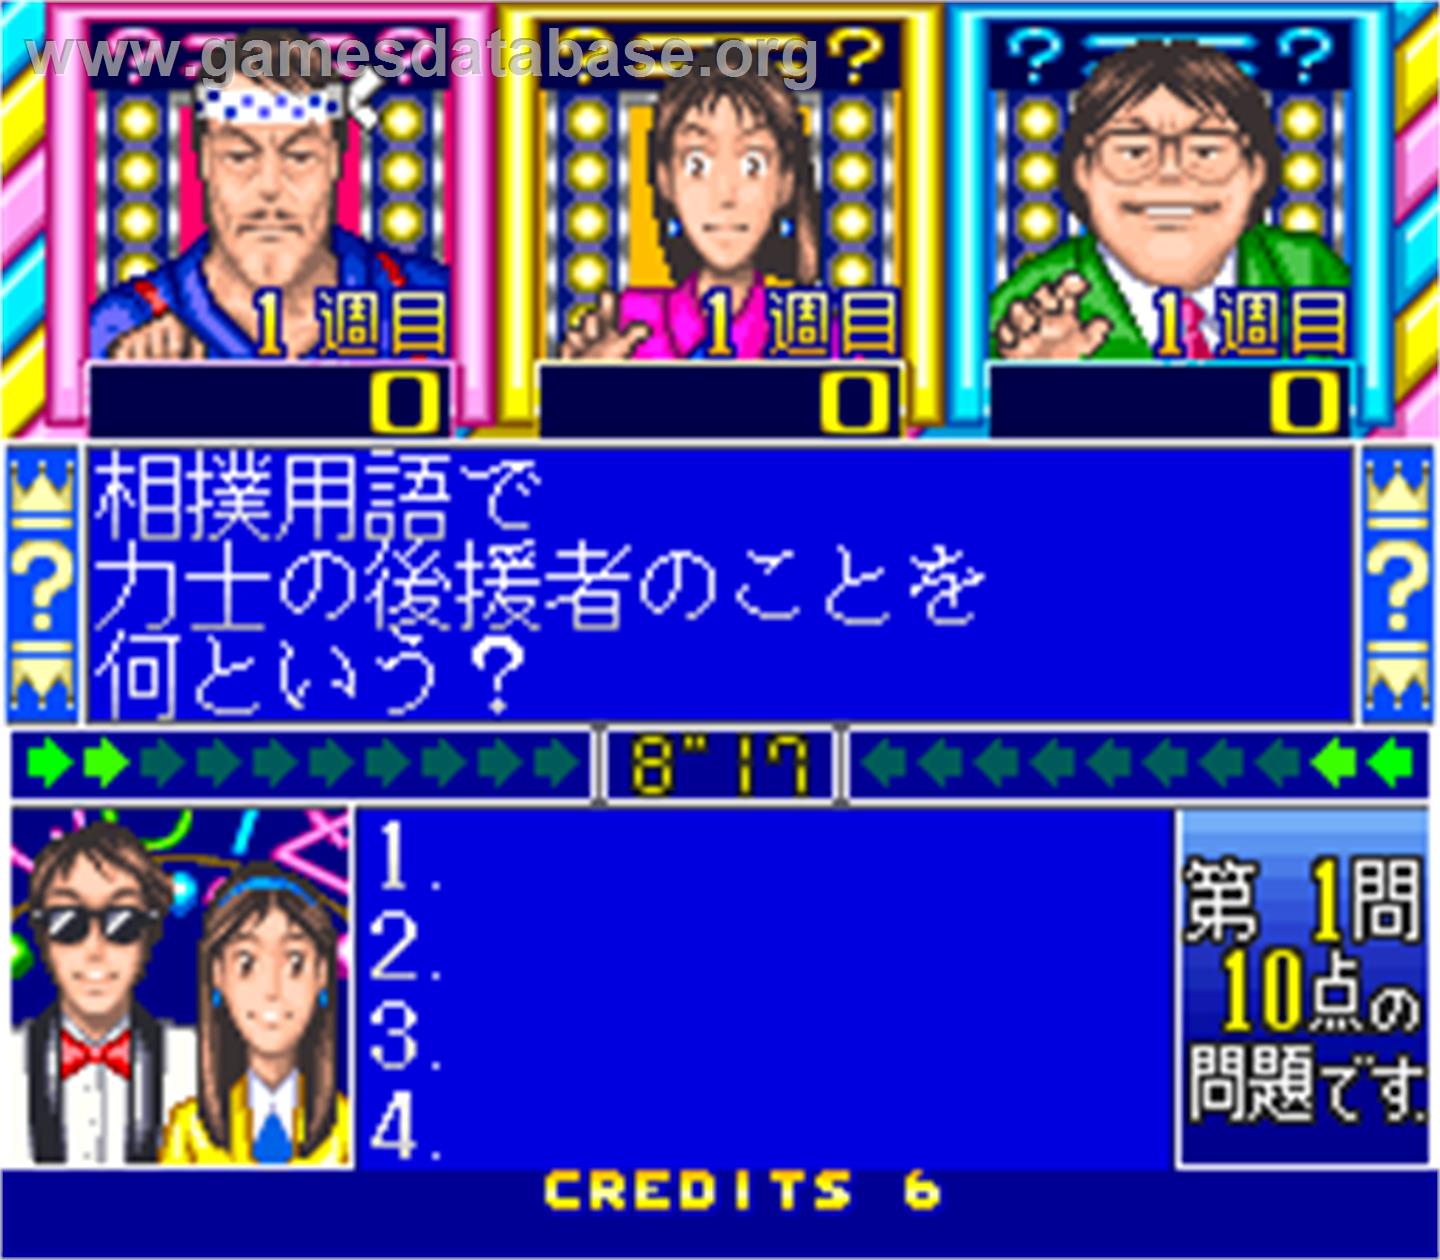 Hayaoshi Quiz Ouza Ketteisen - The King Of Quiz - Arcade - Artwork - In Game